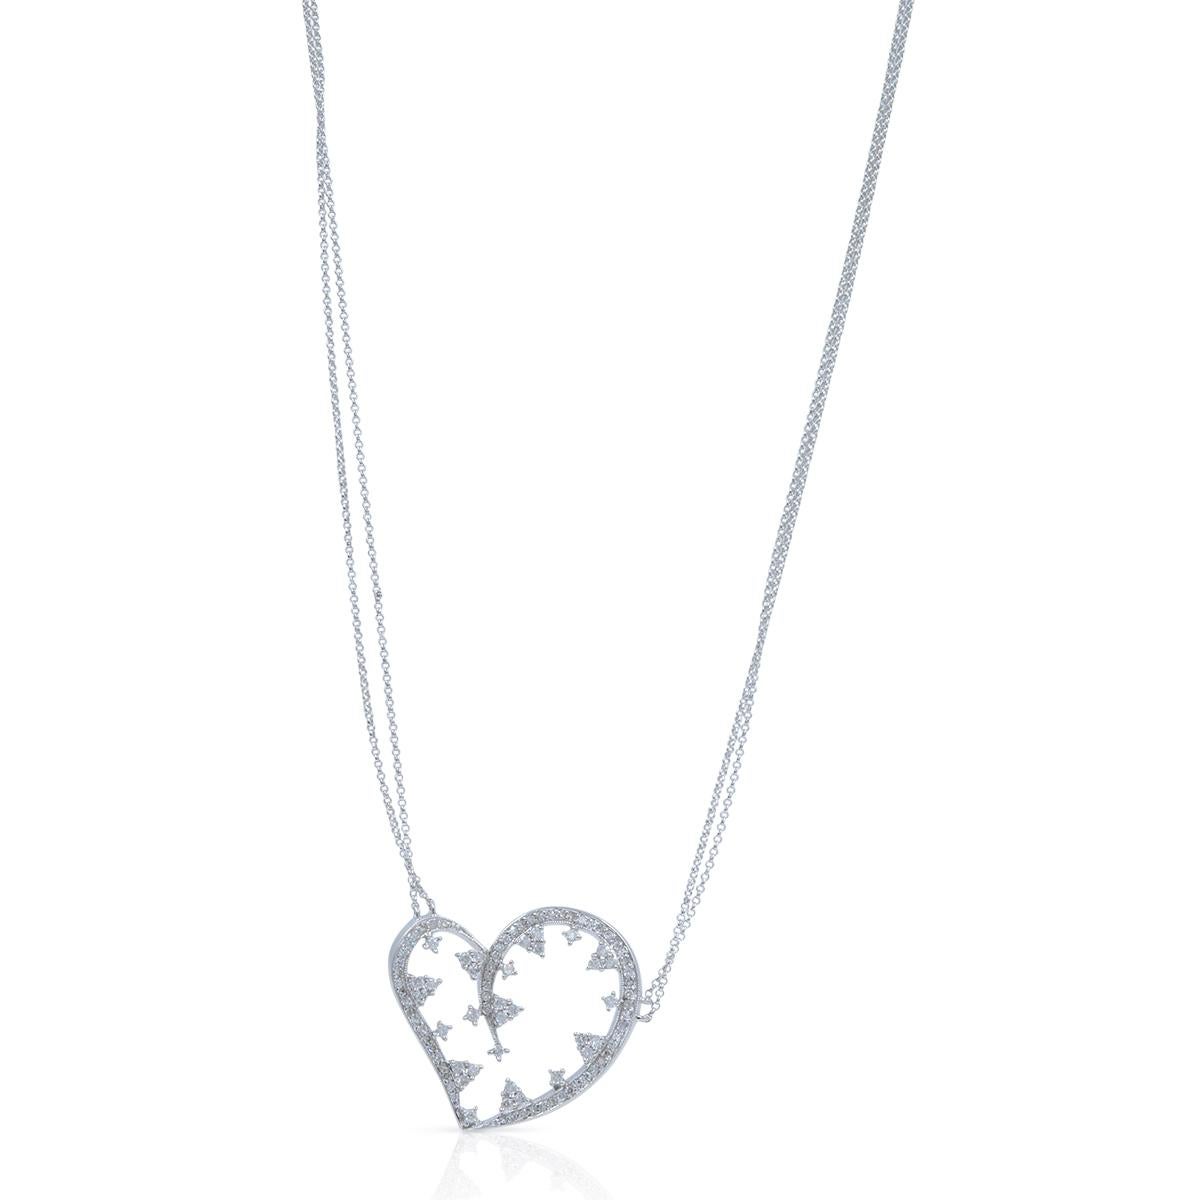 Round Cut Natural Diamond Heart Ladies Pendant Necklace 14K White Gold 1.50Cttw For Sale